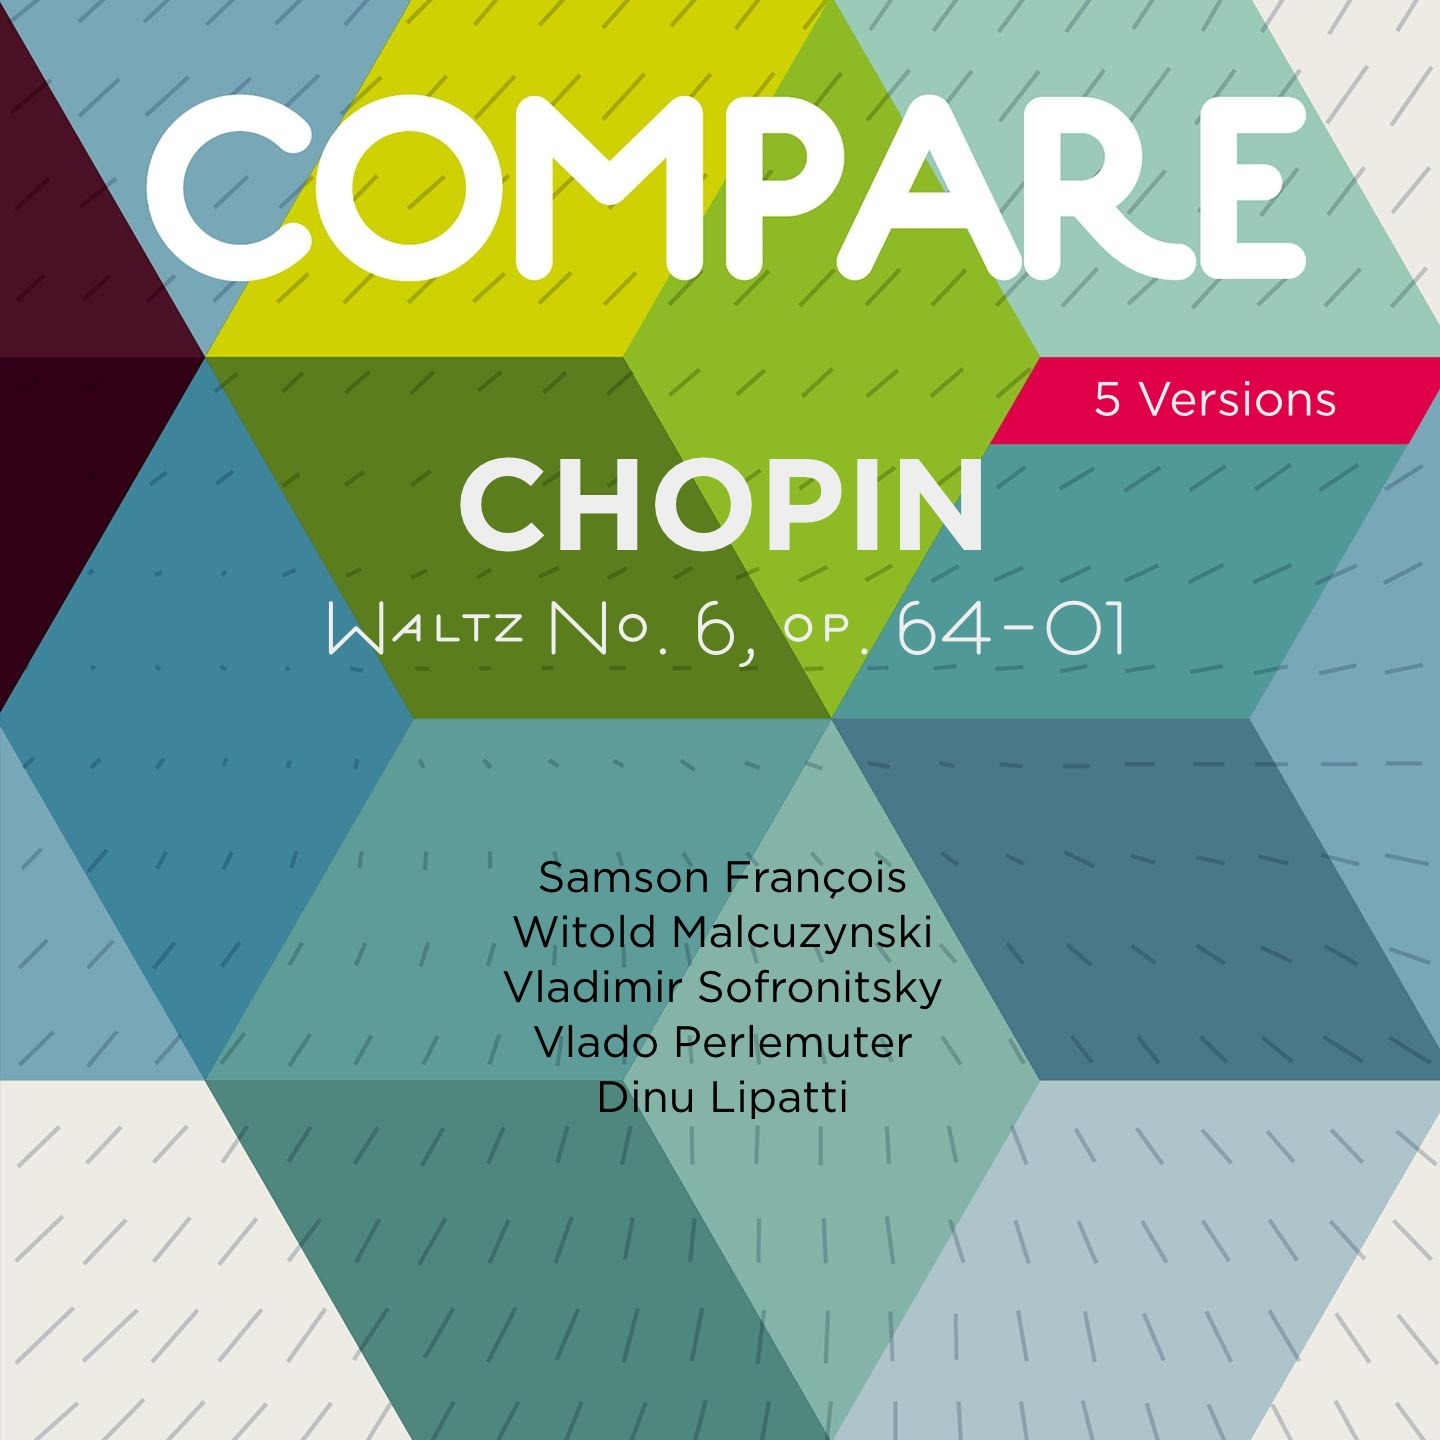 Chopin: Waltzes, Op. 64 "Minute Waltz", Samson François vs. Witold Malcuzynski vs. Vladimir Sofronitsky vs. Vlado Perlemuter vs. Dinu Lipattia